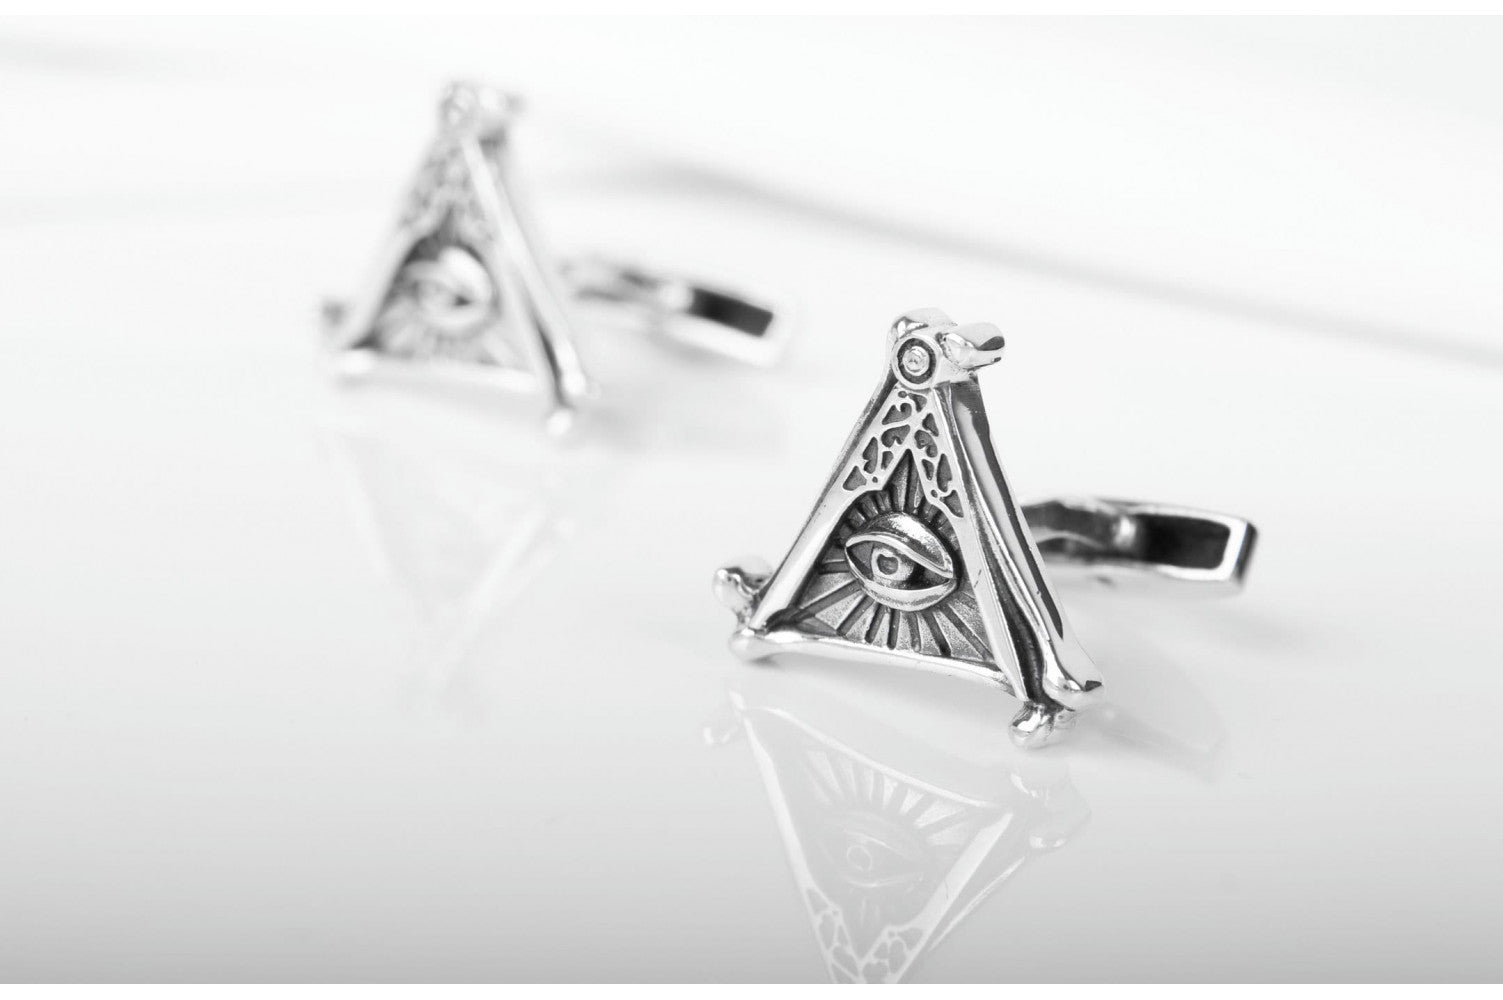 925 Silver Masonic Cufflinks with Eye of Providence, unique handmade jewelry